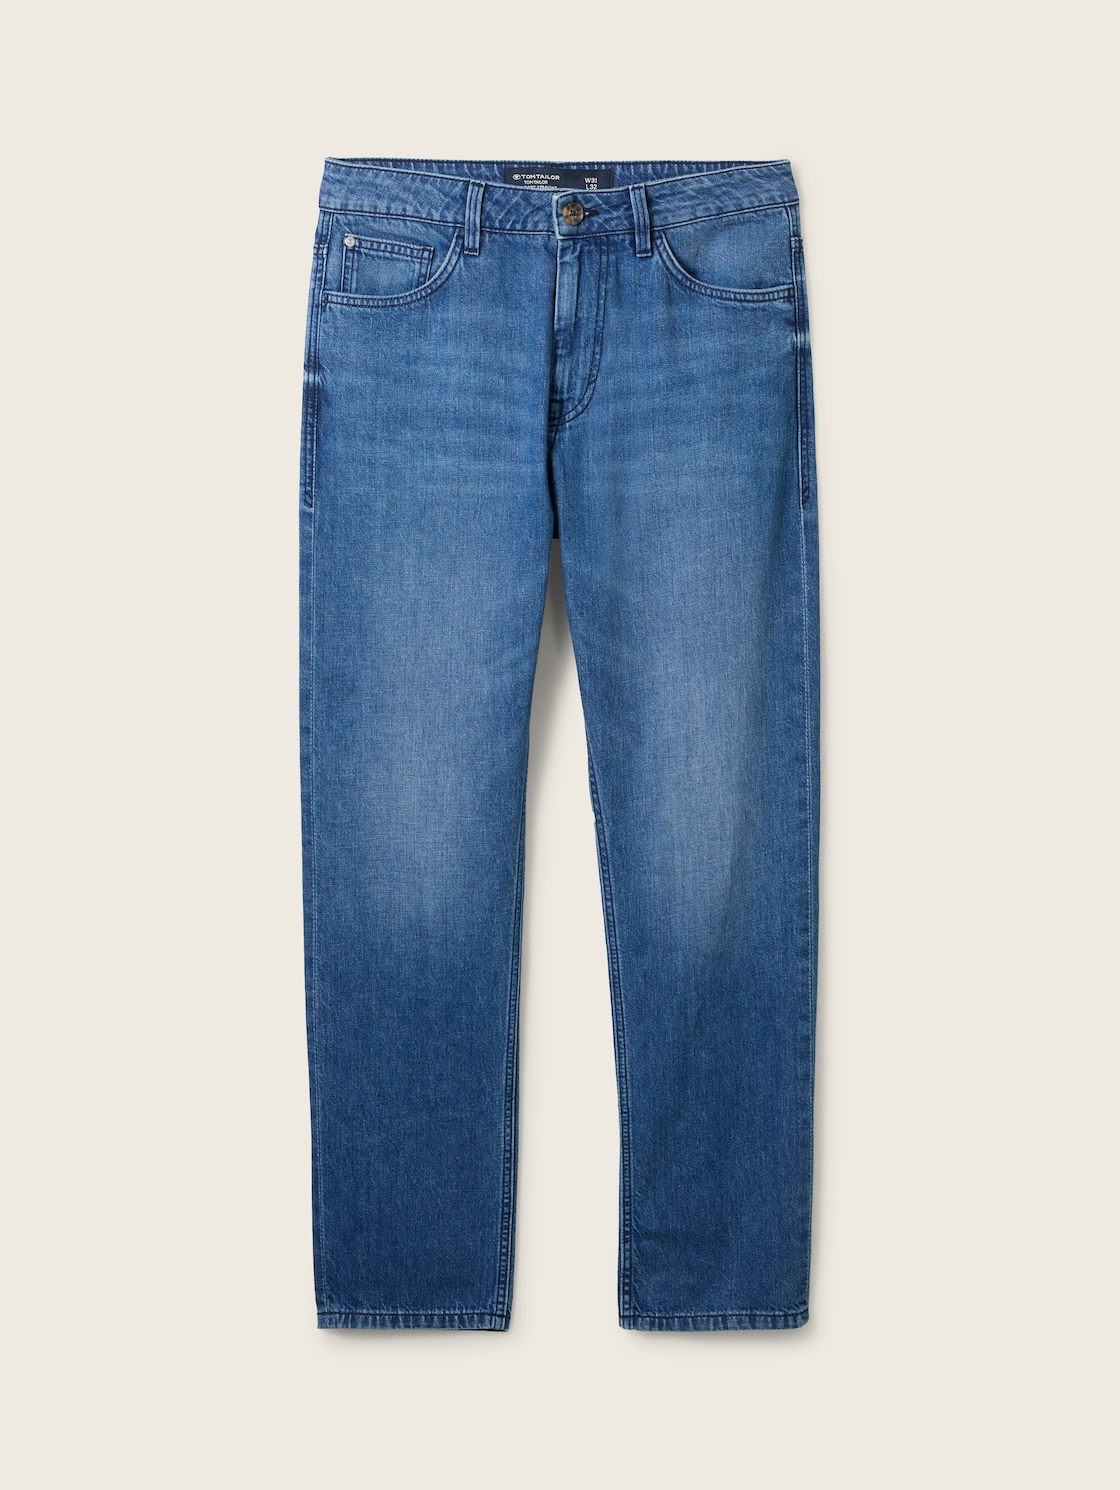 TOM TAILOR Herren Comfort Straight Jeans, blau, Uni, Gr. 33/36 von Tom Tailor